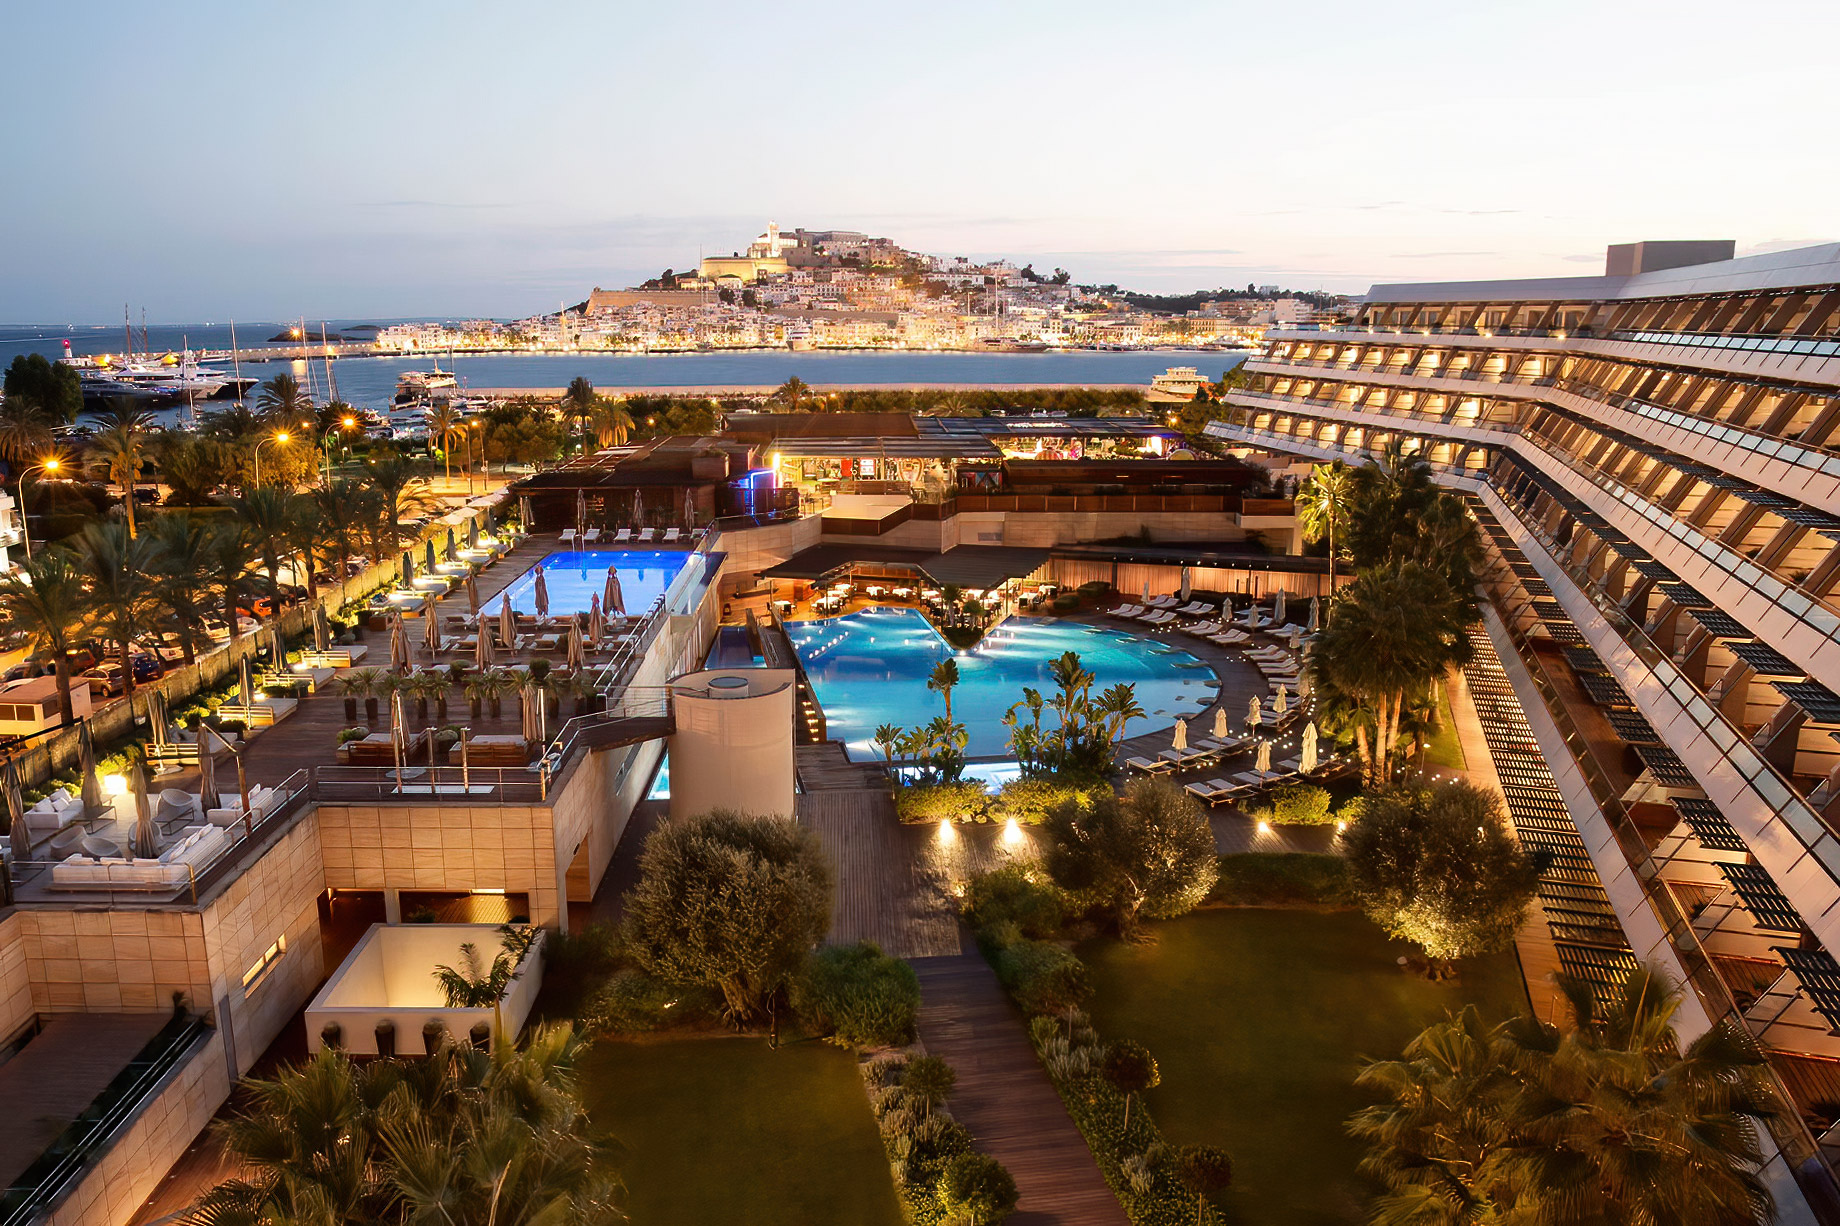 Ibiza Gran Hotel Casino - Balearic Islands, Spain